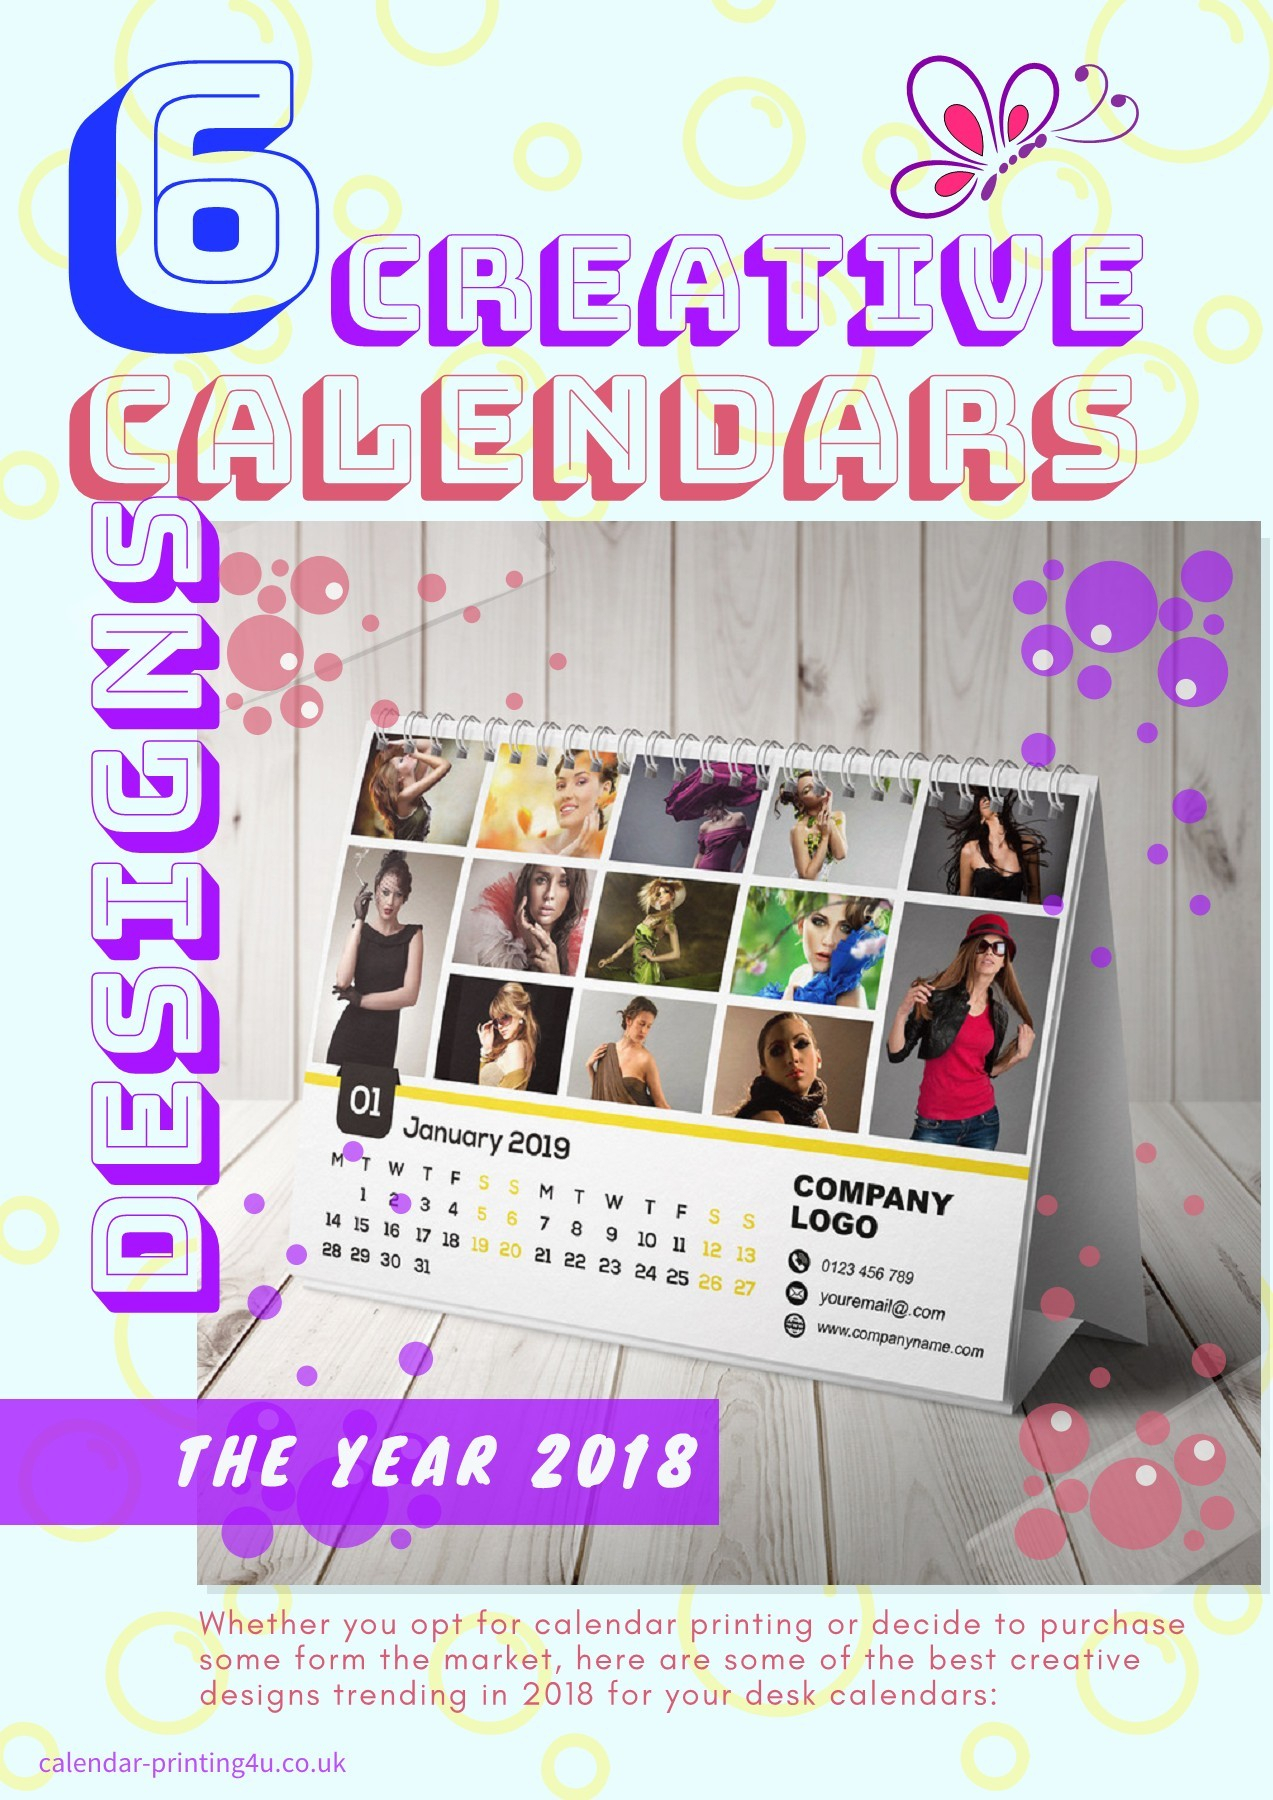 6 Creative Calendar Design Ideas For Your Desk For The Year